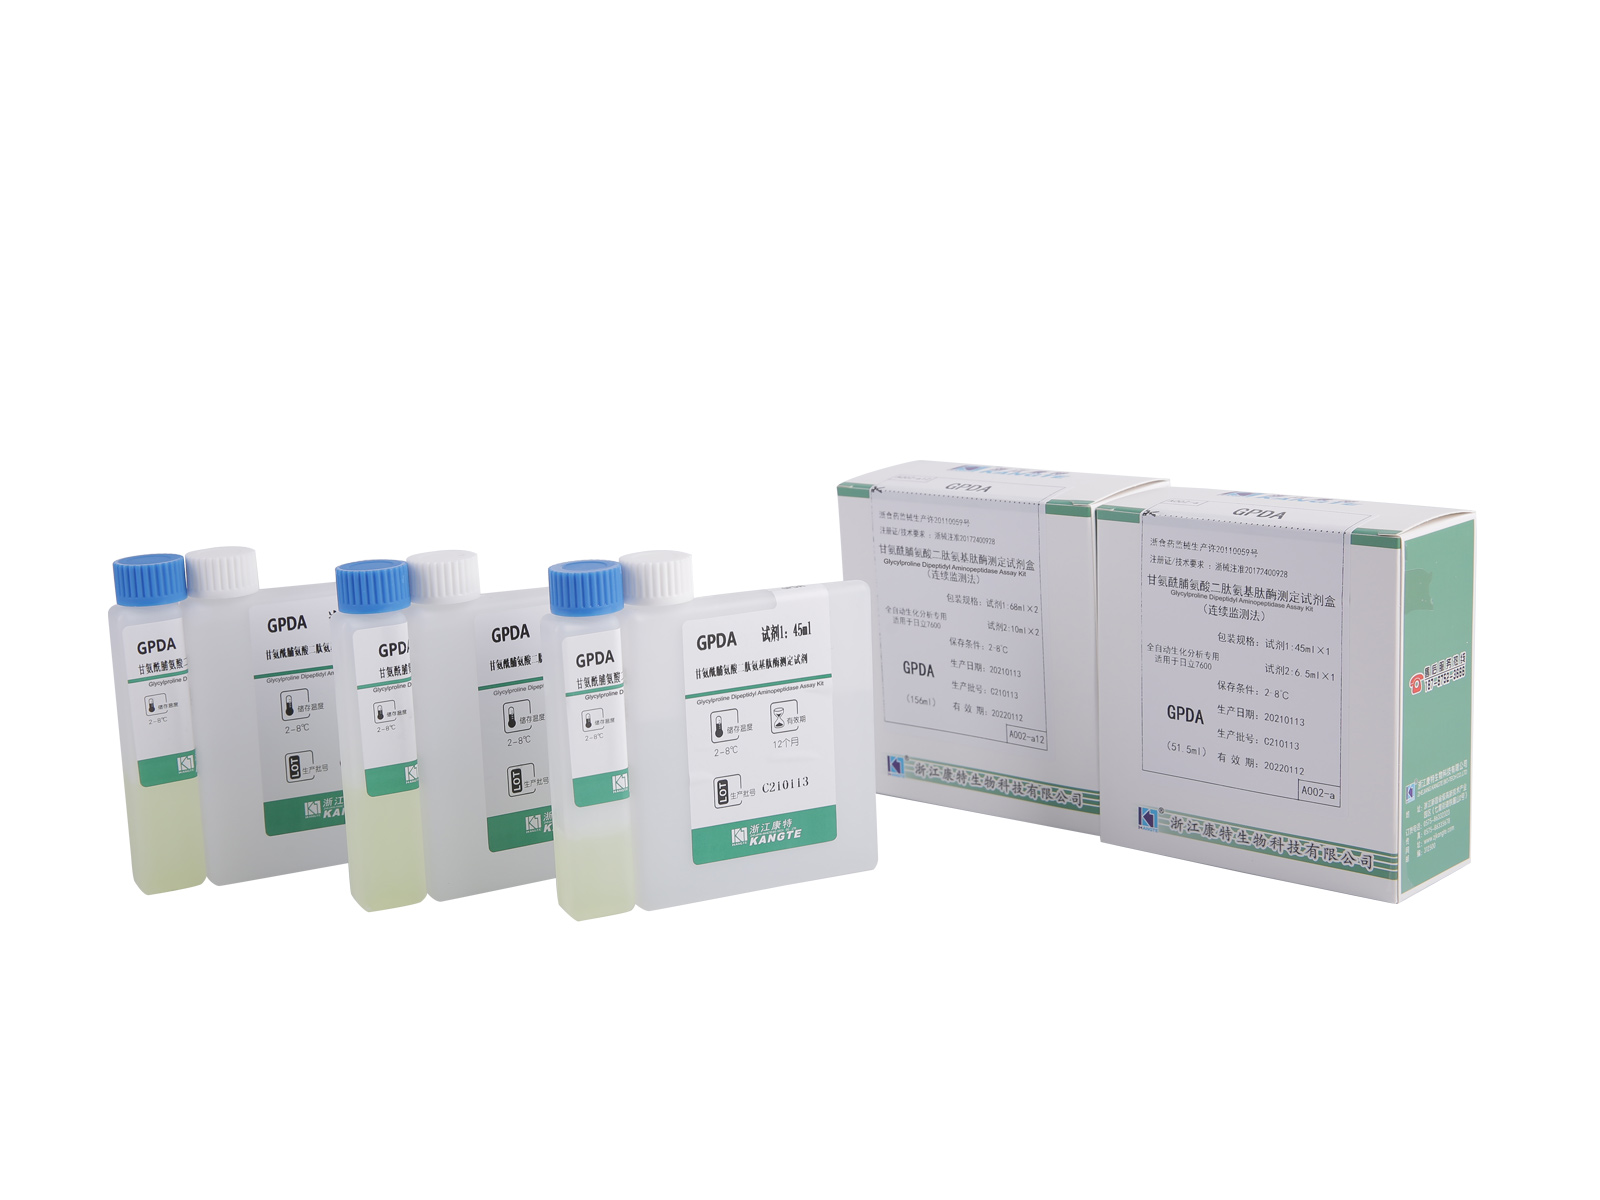 GPDA】Glycylproline Dipeptidyl Aminopeptidase Asssay Kit (continua magna methodo)